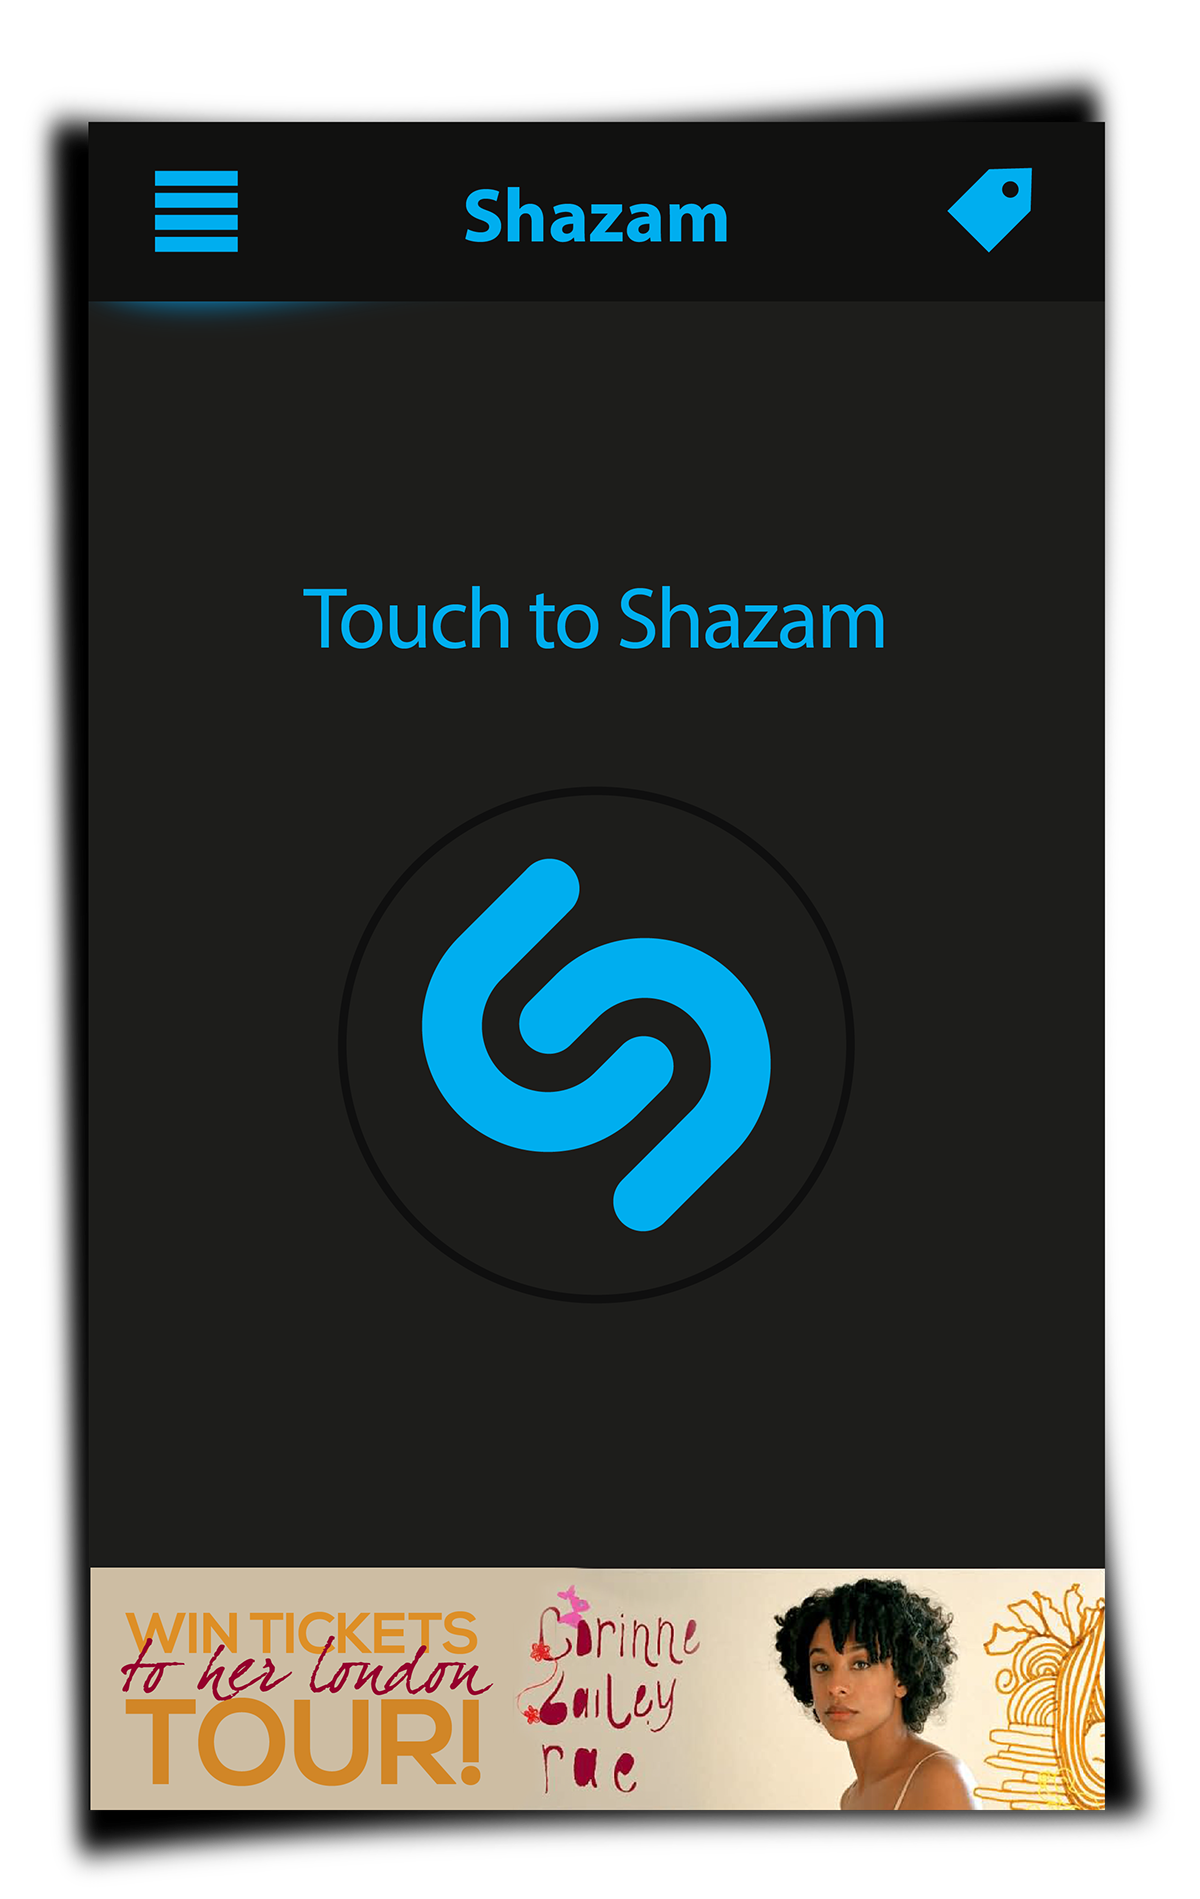 Shazam user interface Zimbabwe Bulawayo tehn diamond Corinne Bailey Rae icons